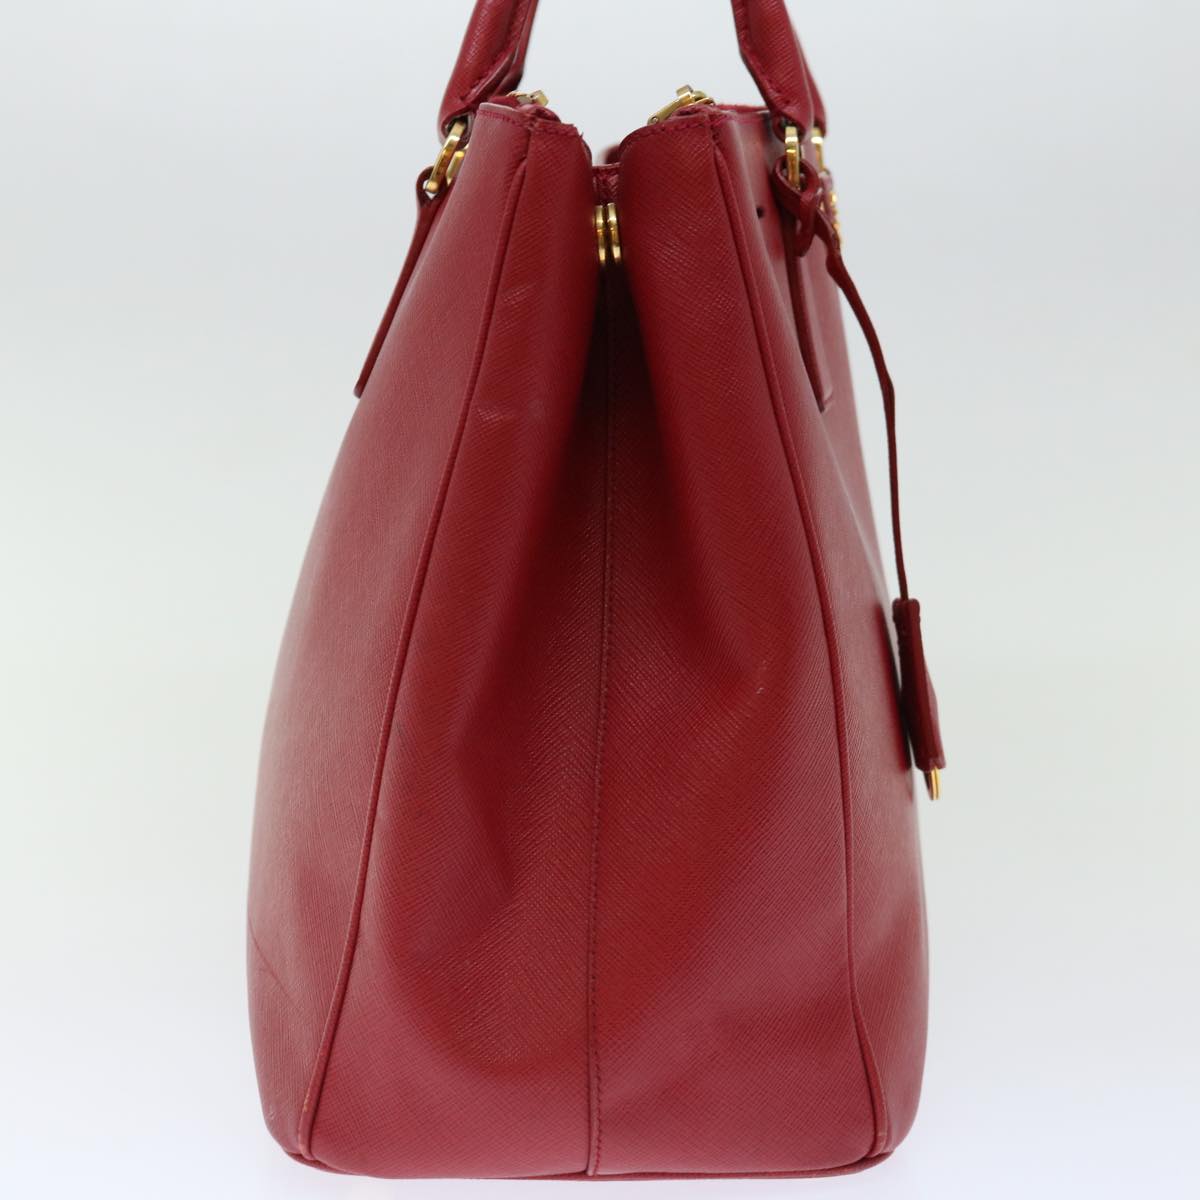 PRADA Galleria Hand Bag Safiano leather Red Auth am6067